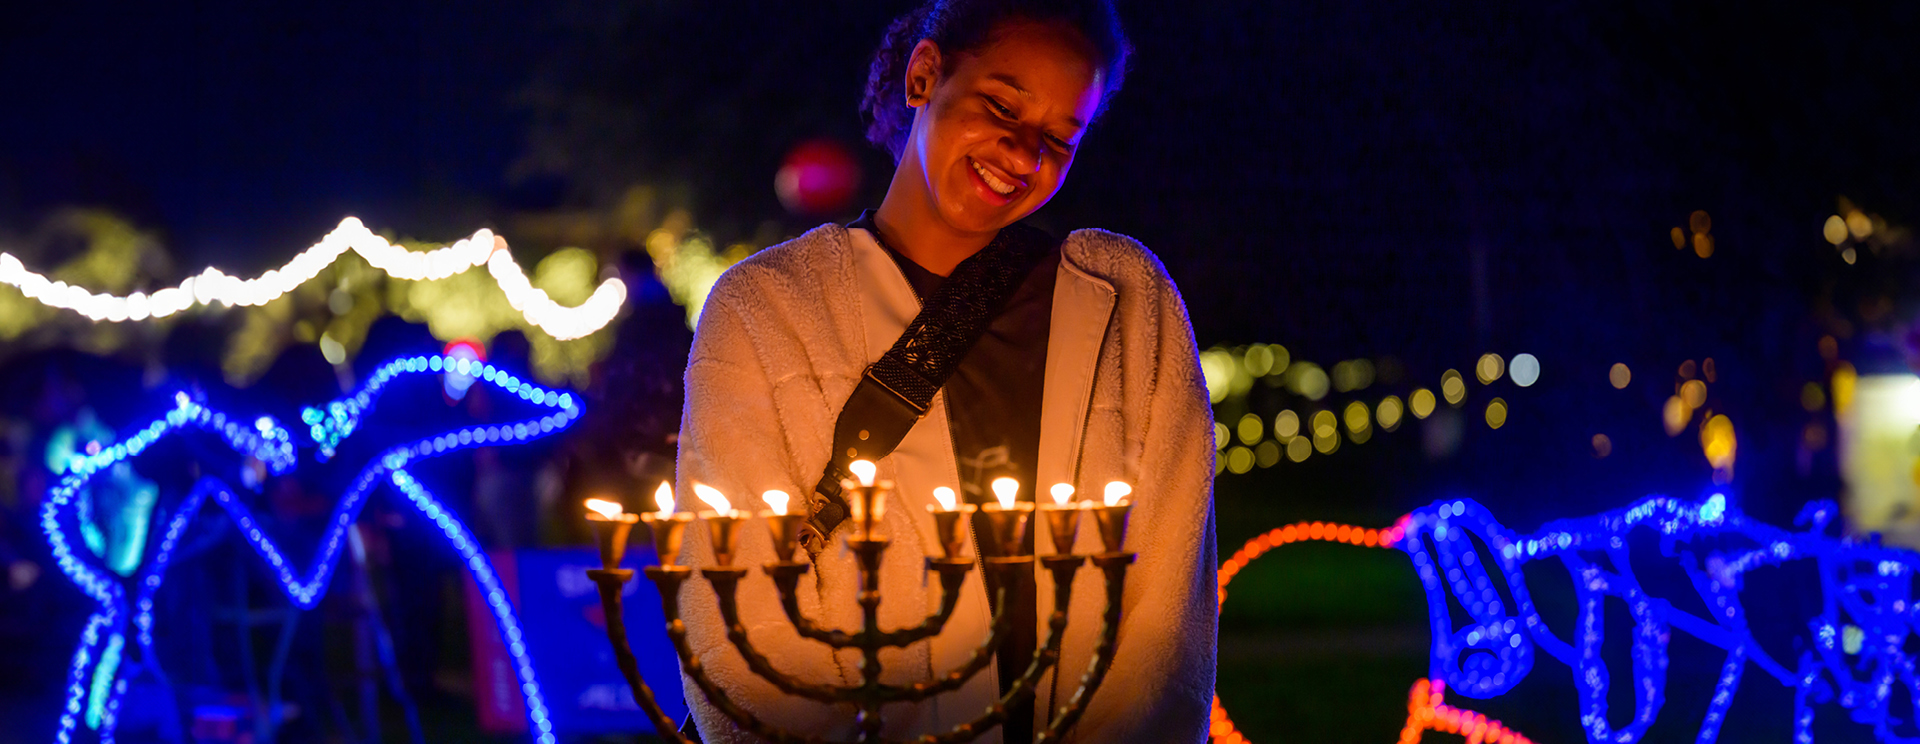 Student lighting the menorah